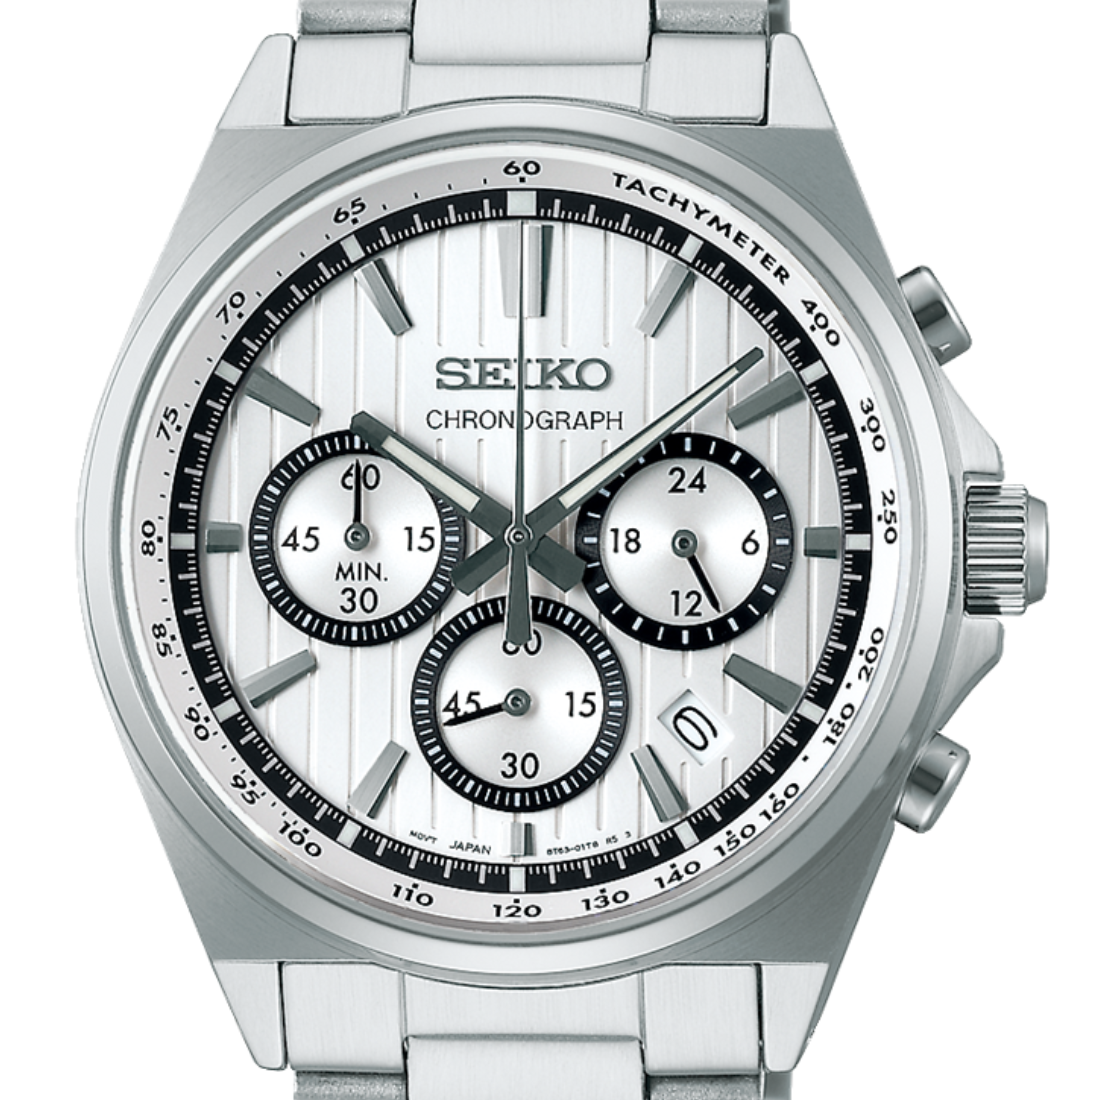 Seiko Selection S-Series SBTR031J SBTR031 Silver Dial Chronograph Watch